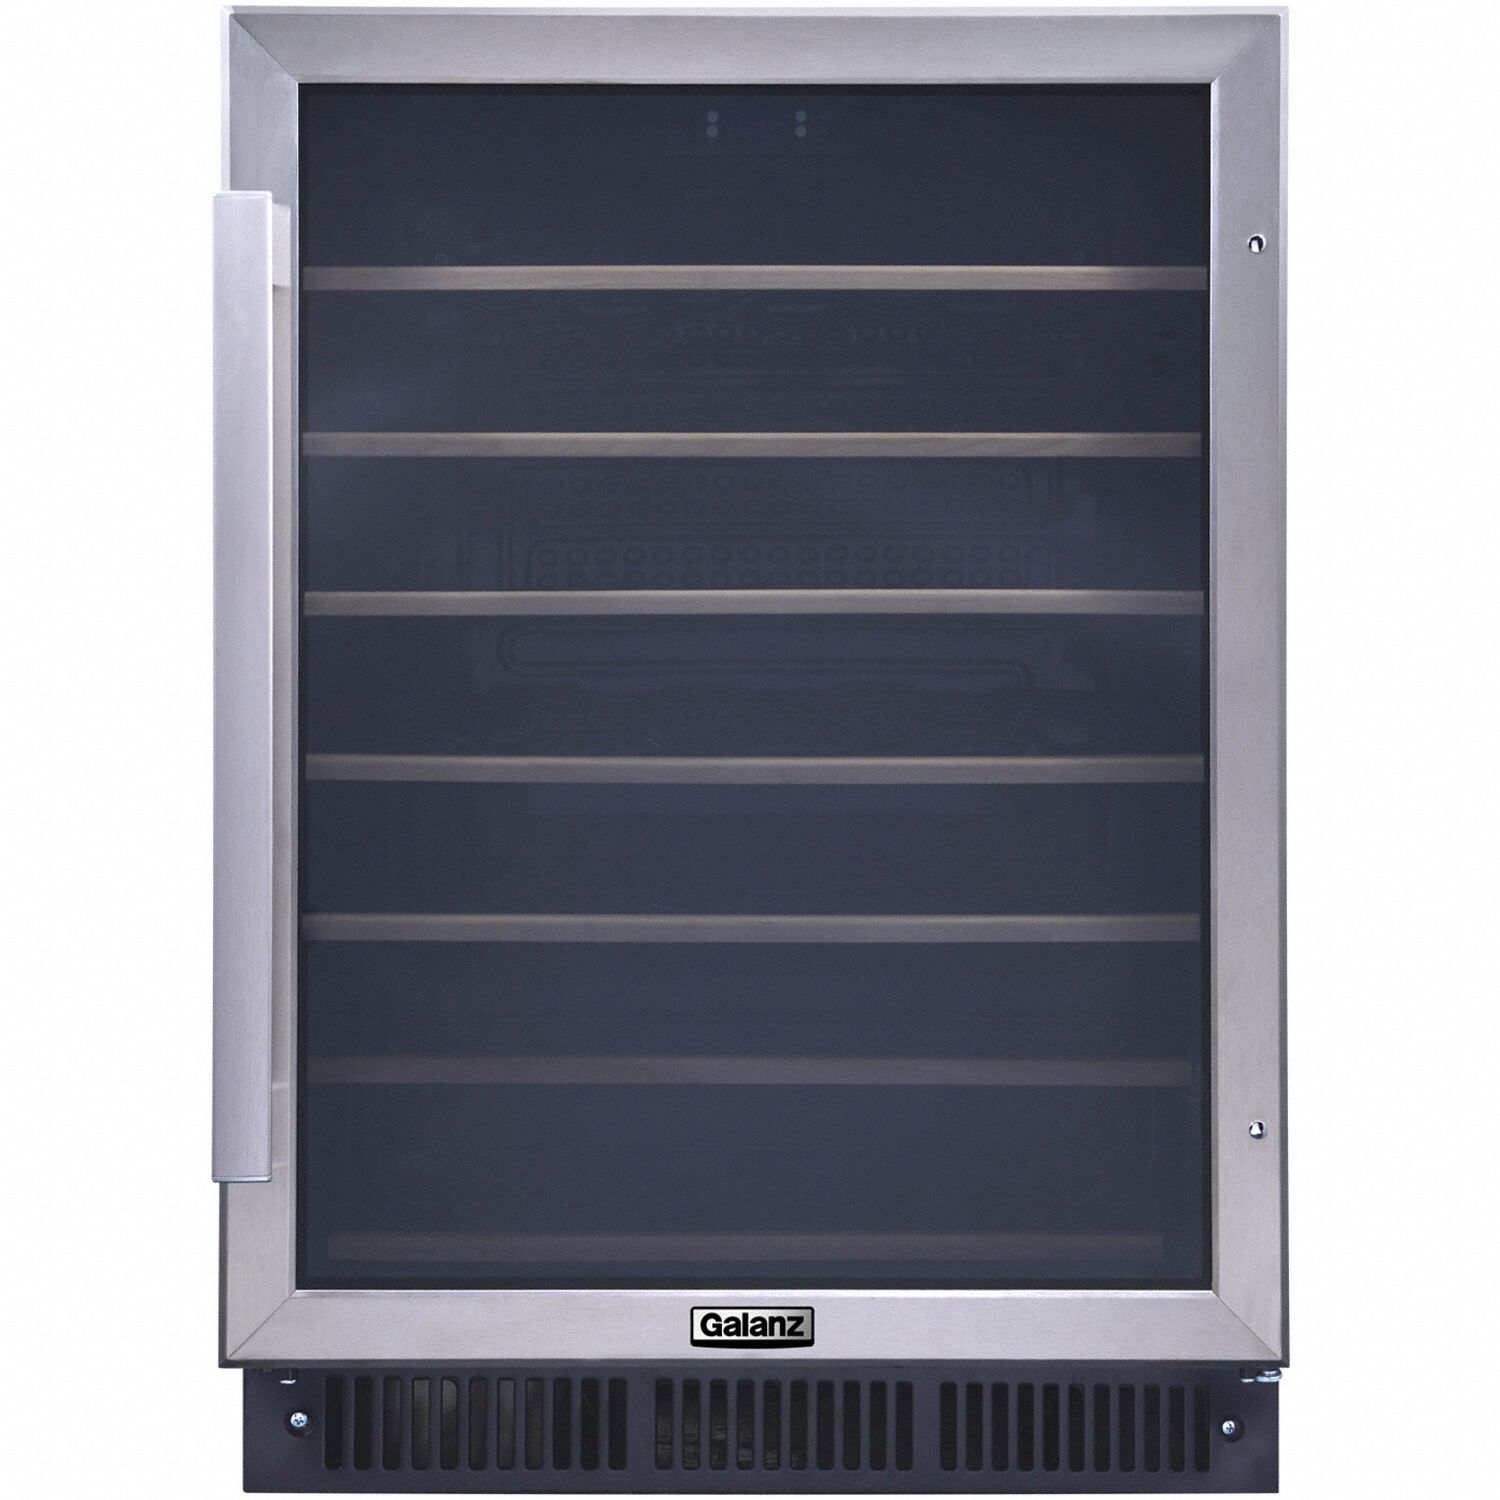 Beverage Cooler Refrigerator: Stainless Steel, 5.7 cu ft Total Capacity, 7 Shelves